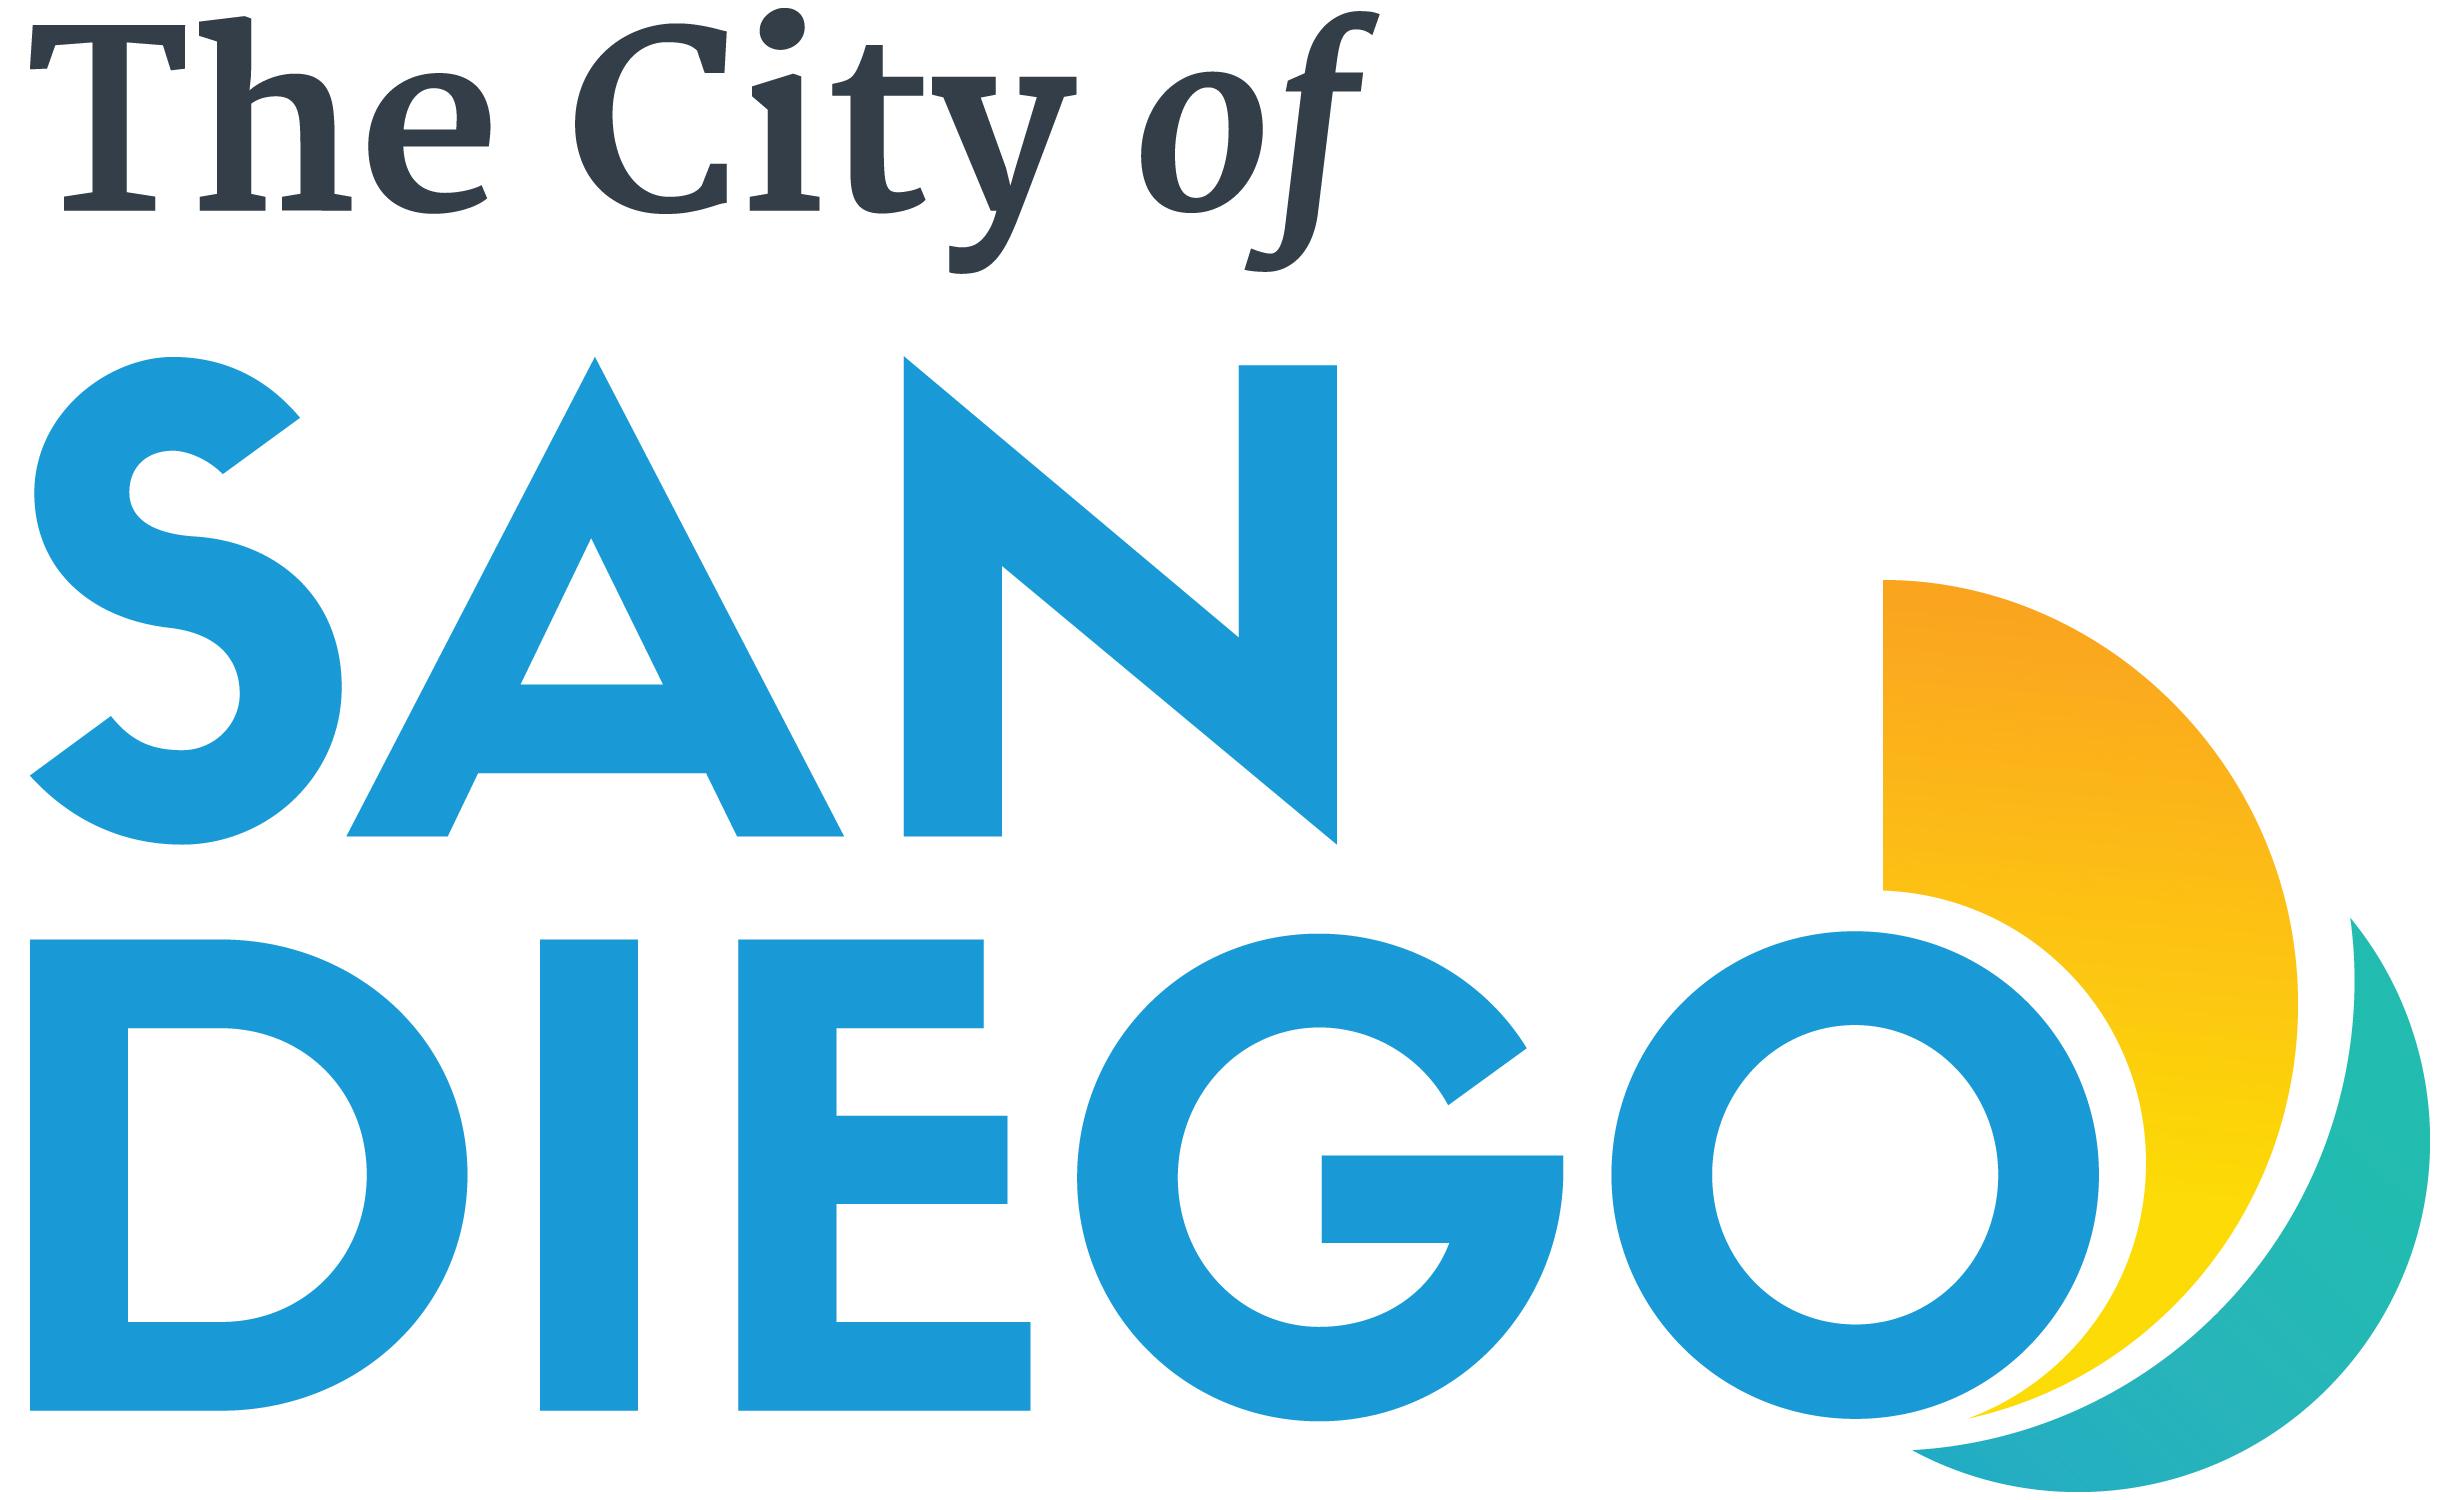 The city of san diego logo